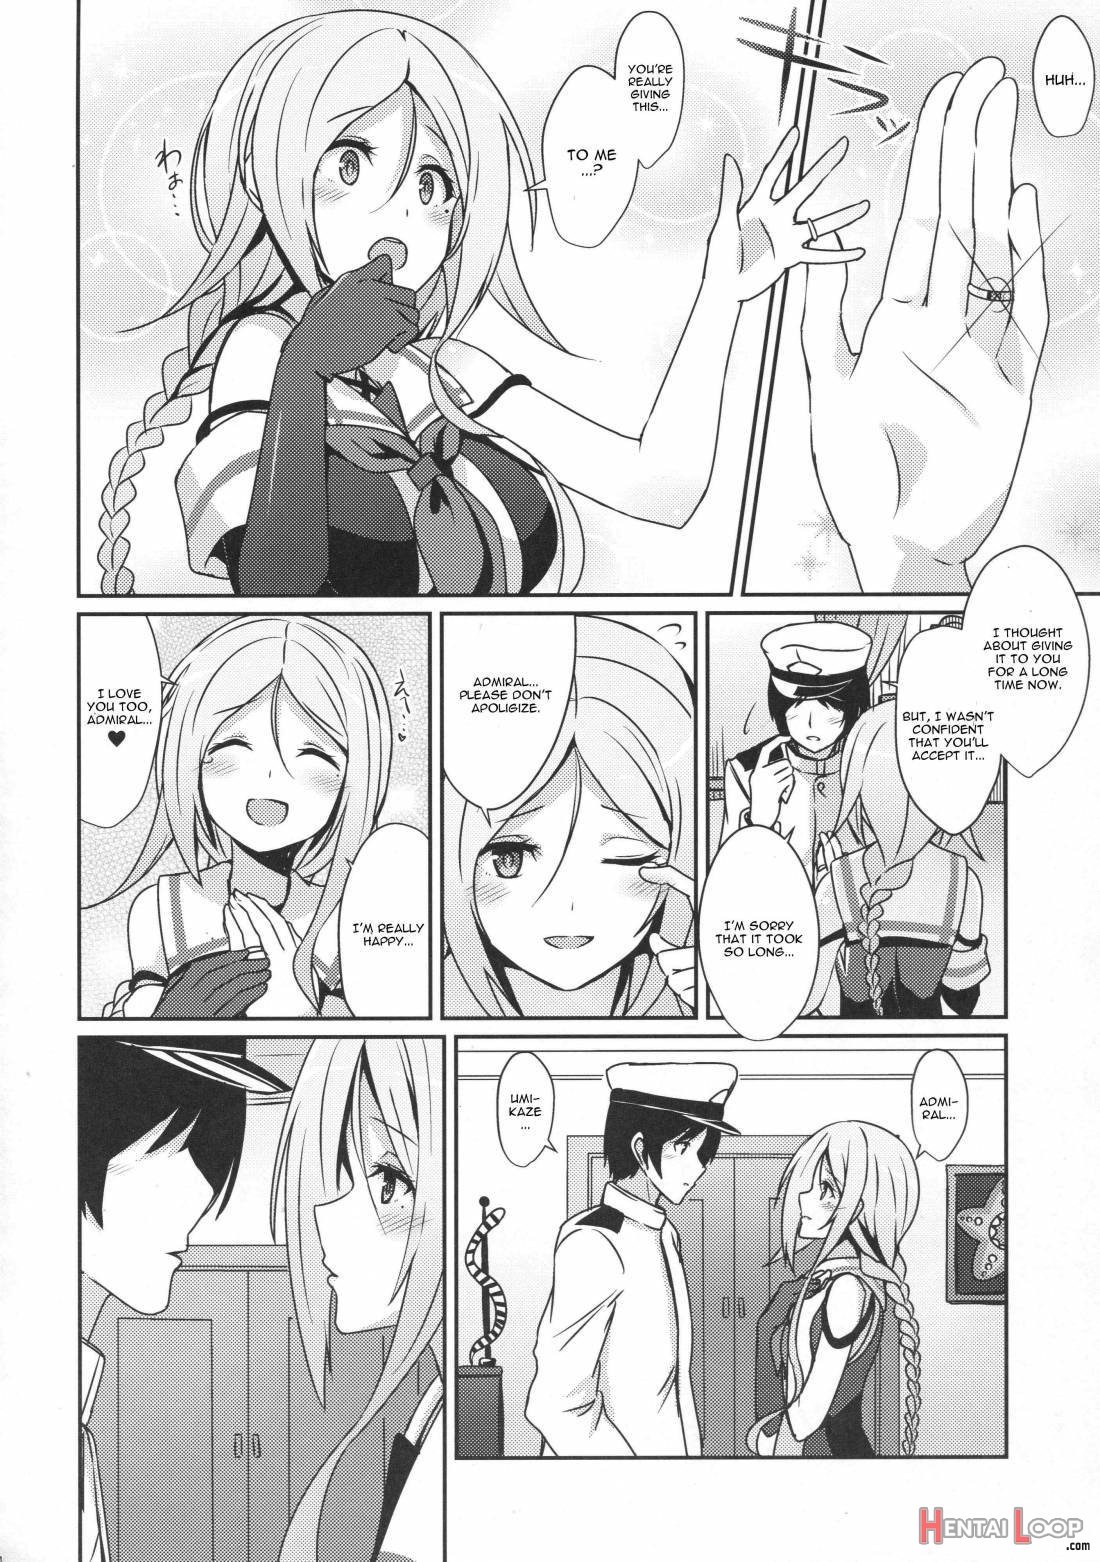 Umikaze no Kekkon Shoya page 3